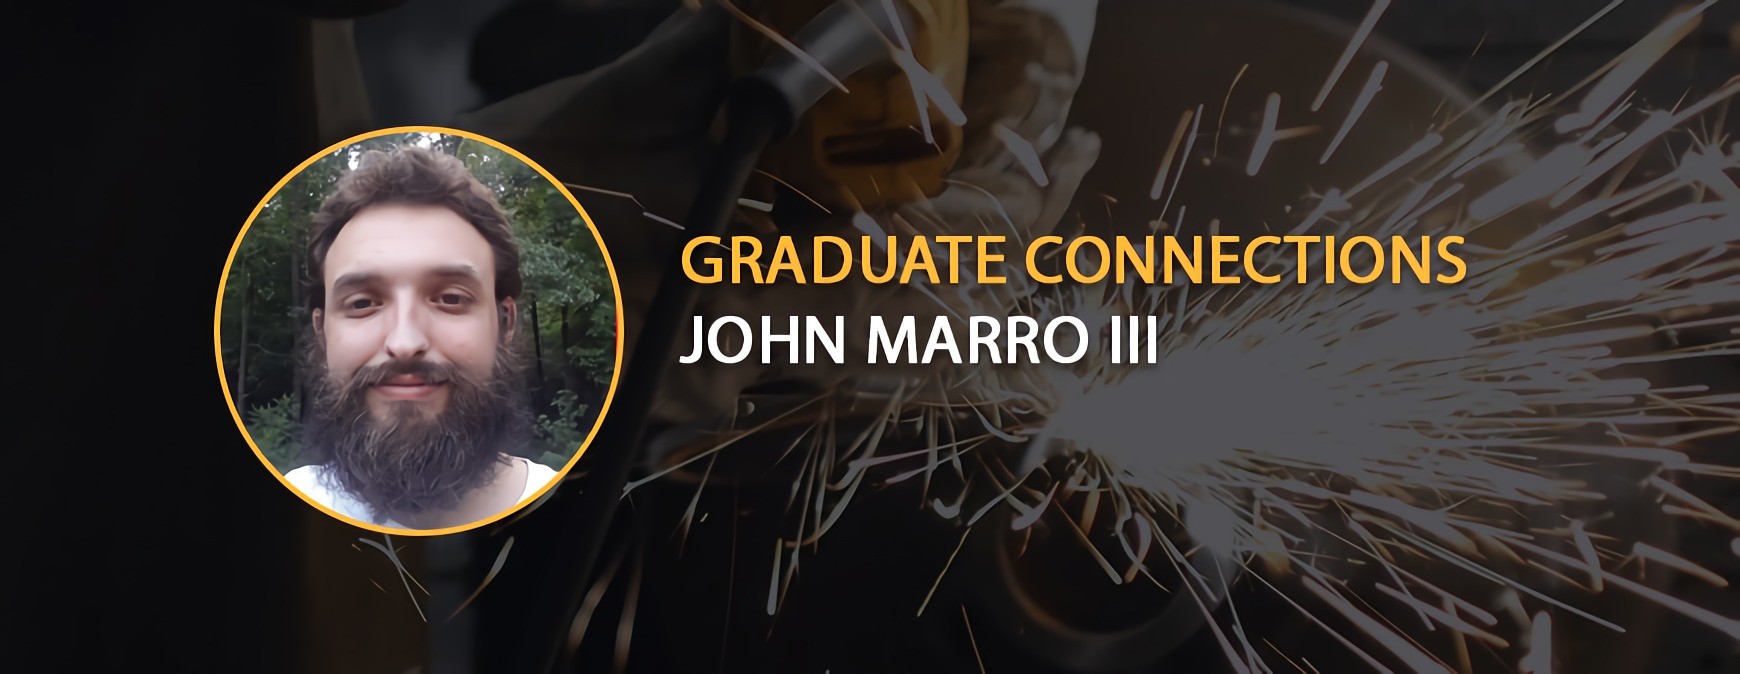 John Marro III Graduate Connections